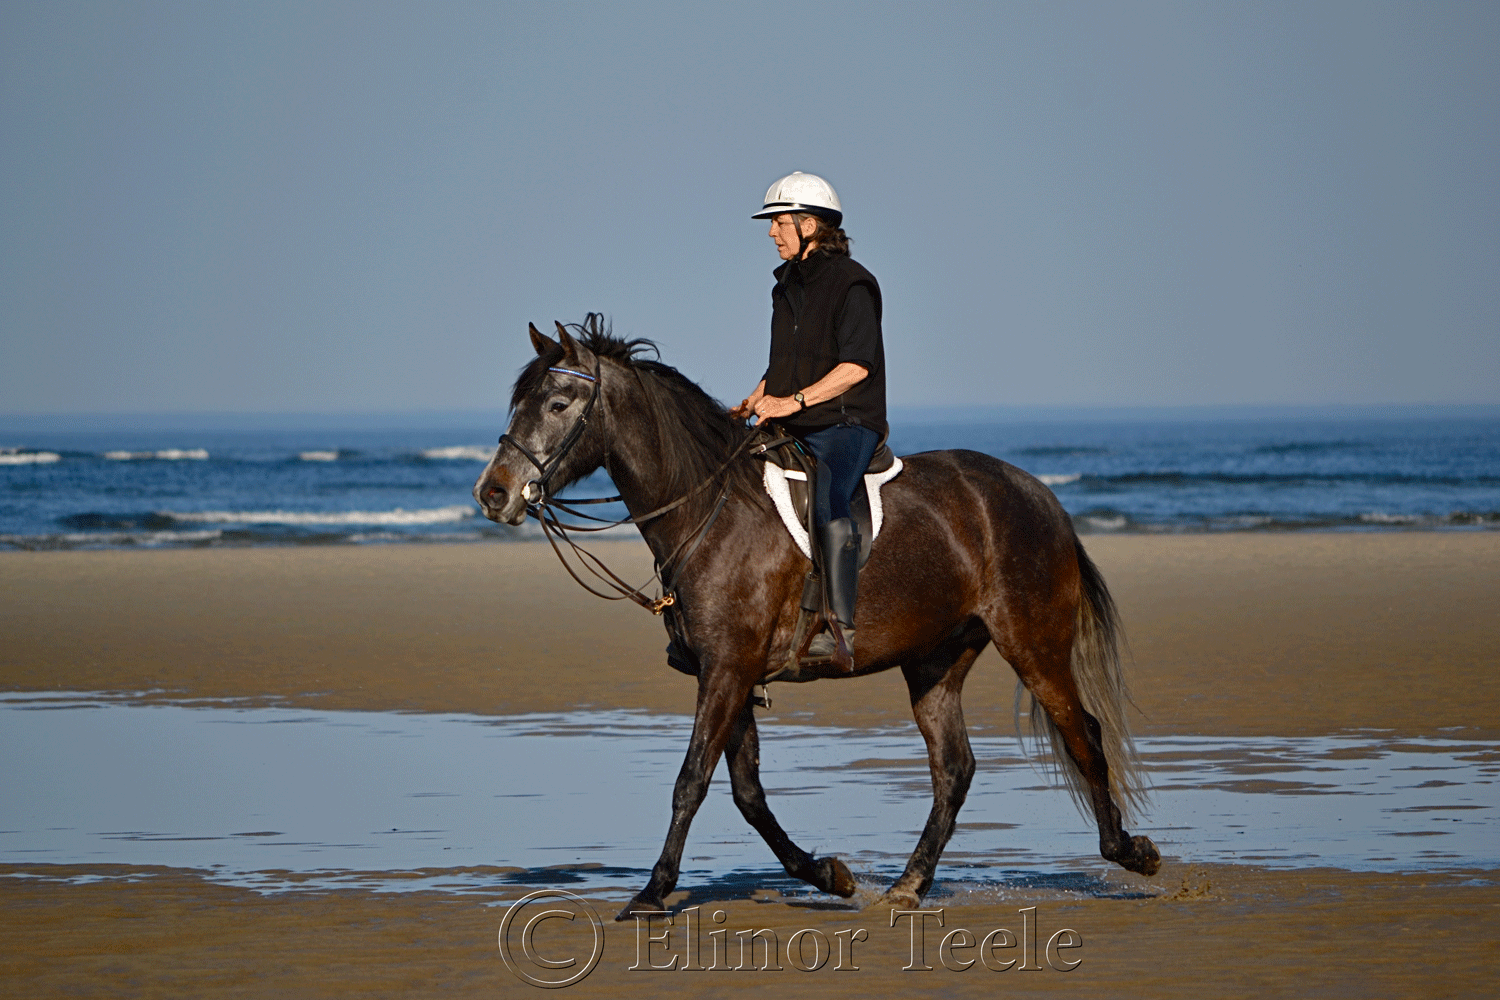 Horse and Rider, Crane's Beach, Ipswich MA